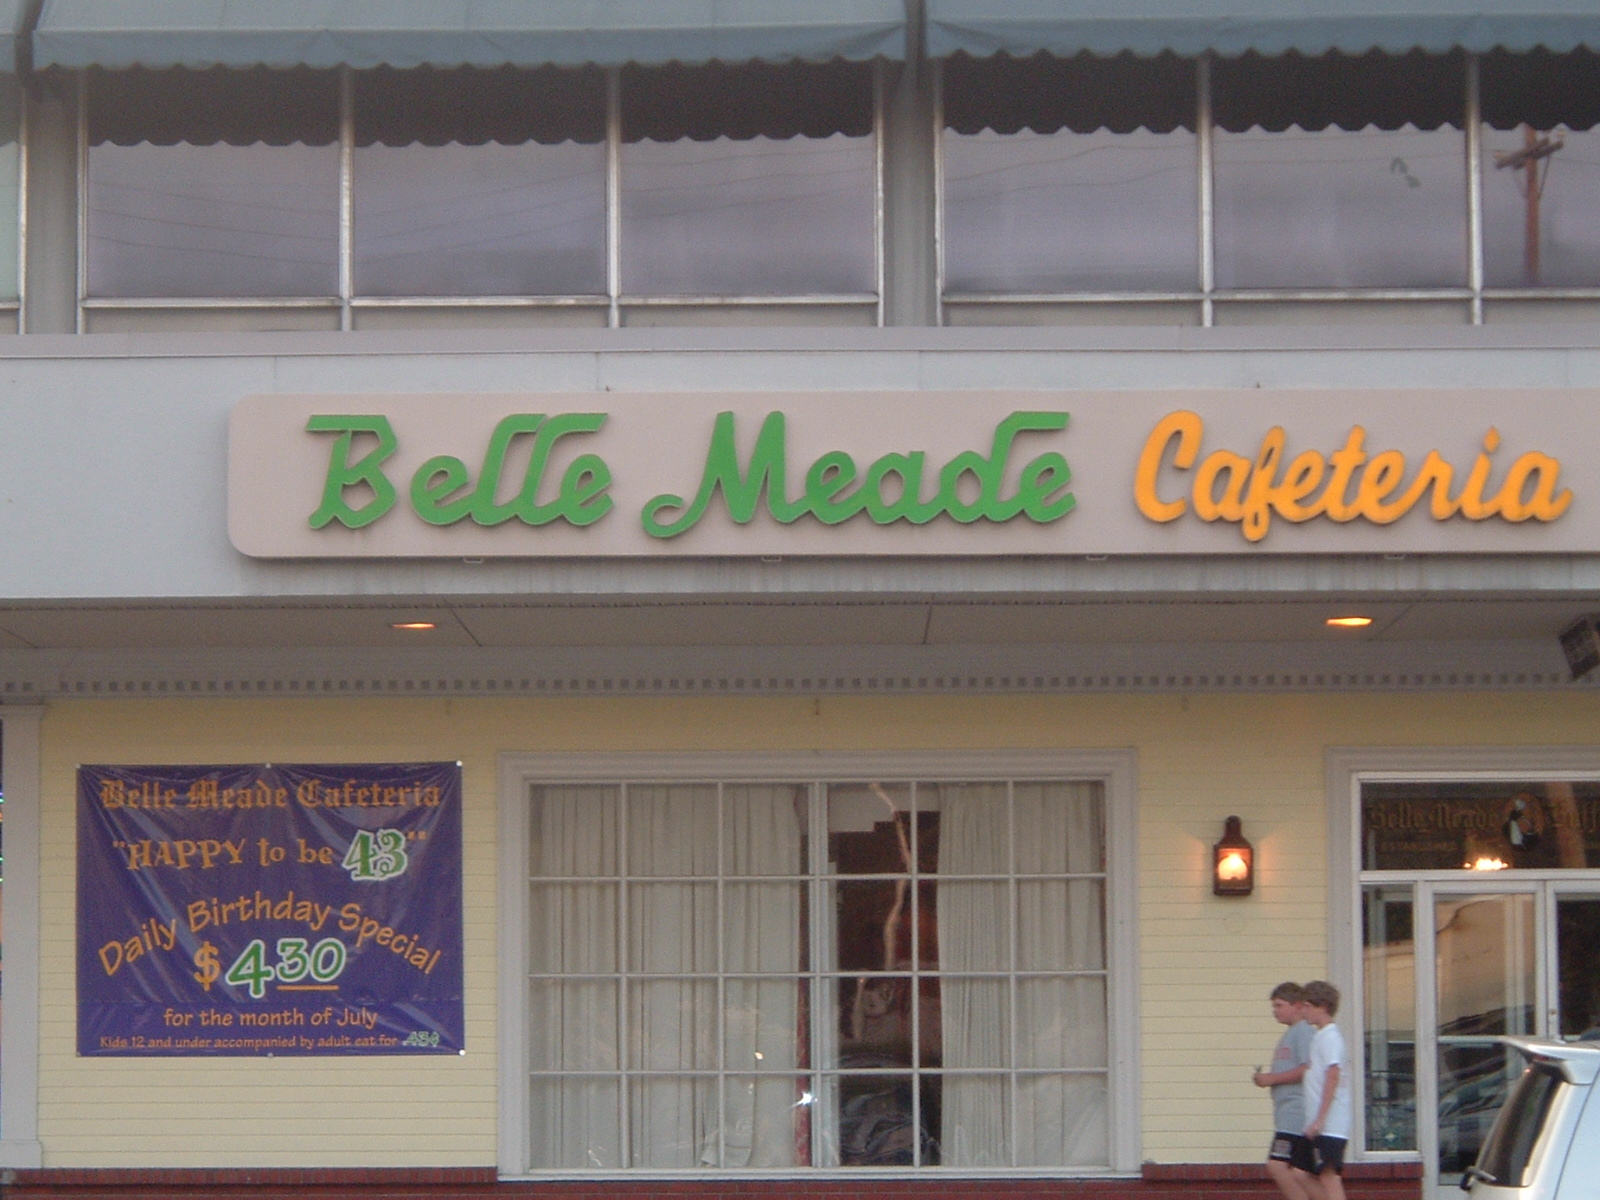 the outside of a latin restaurant called belita media cafe